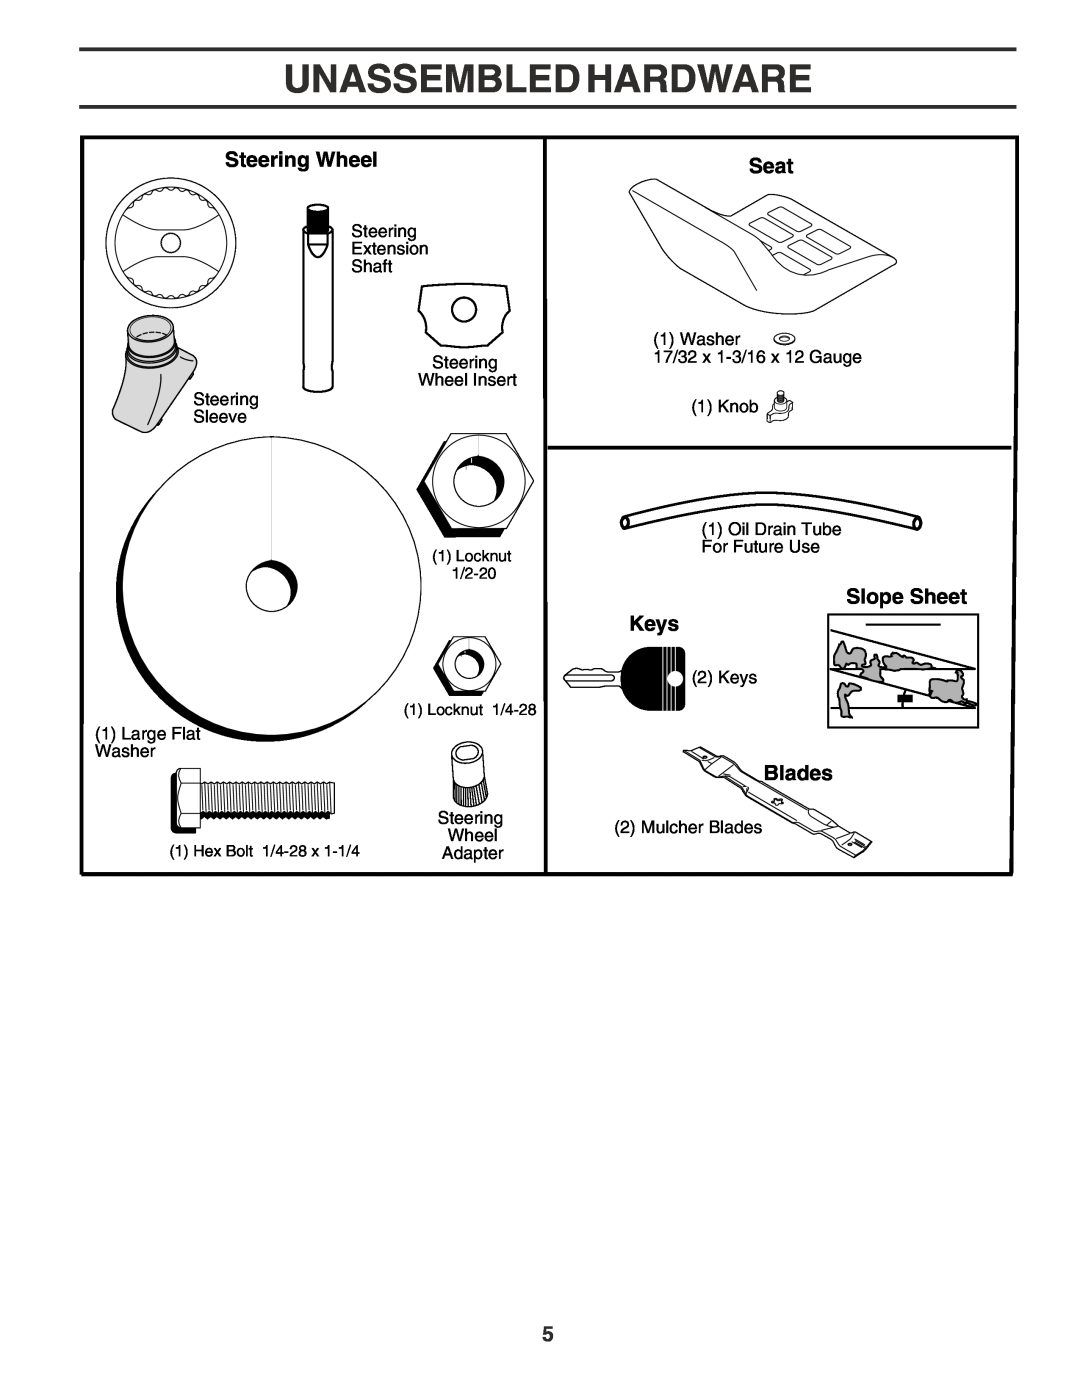 Poulan PPR2042STB owner manual Unassembled Hardware, Steering Wheel, Seat, Slope Sheet Keys, Blades 